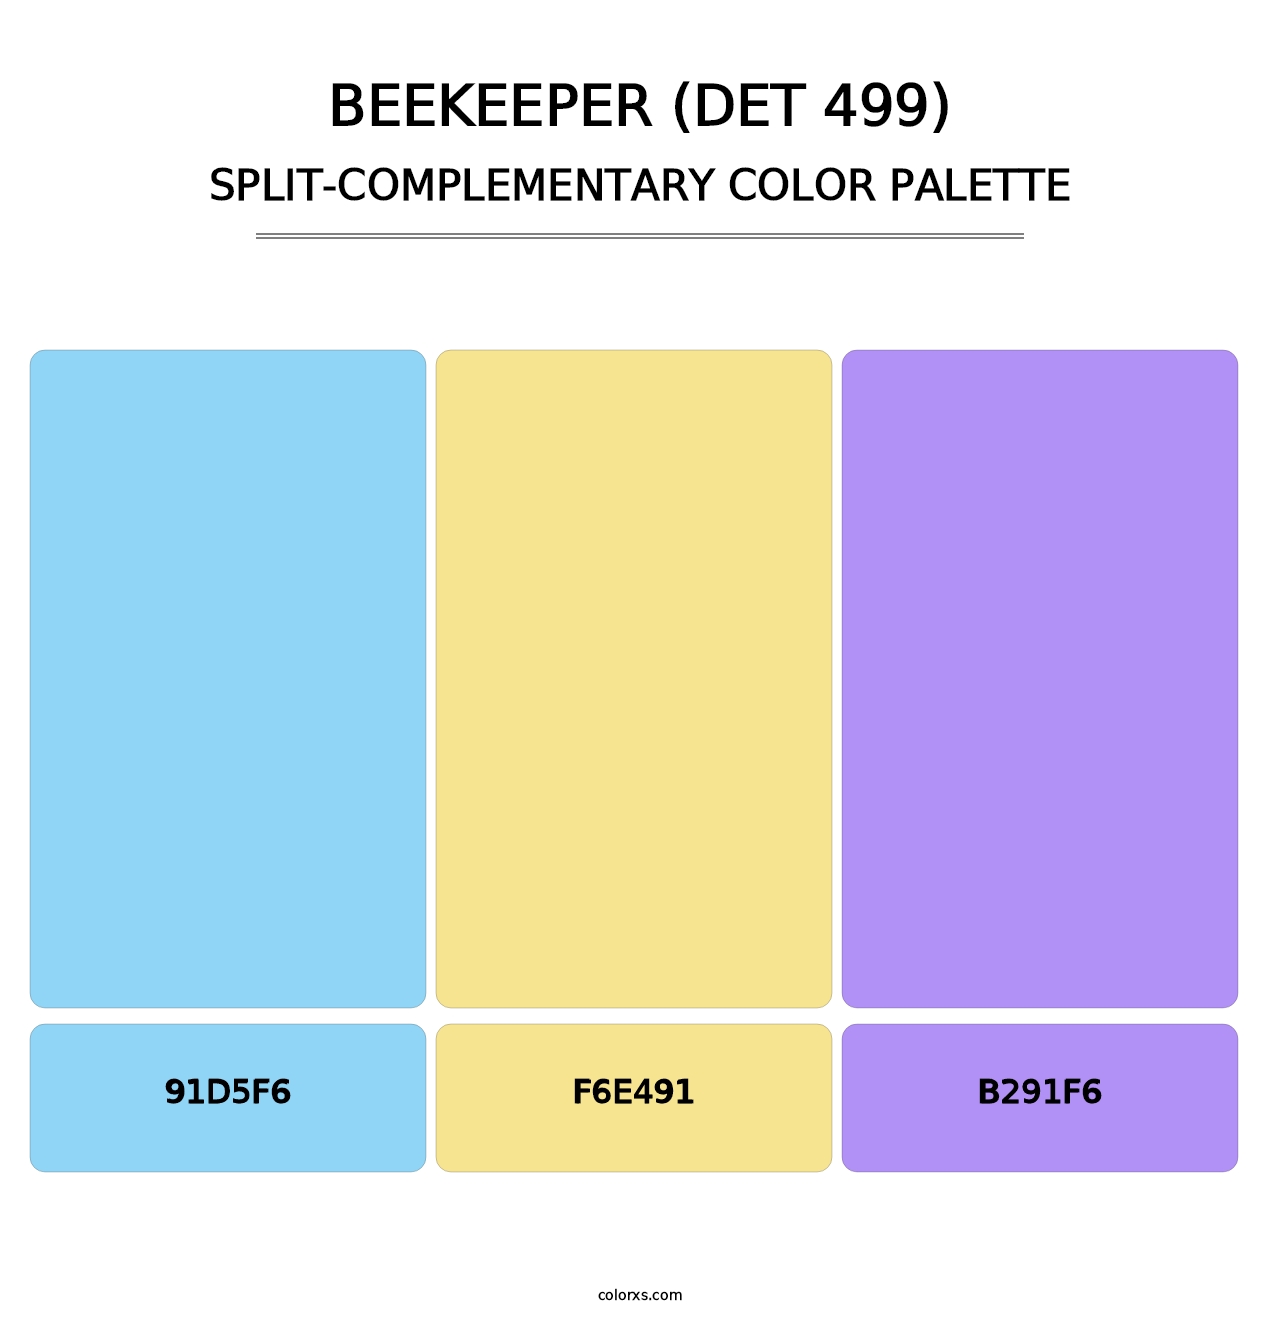 Beekeeper (DET 499) - Split-Complementary Color Palette